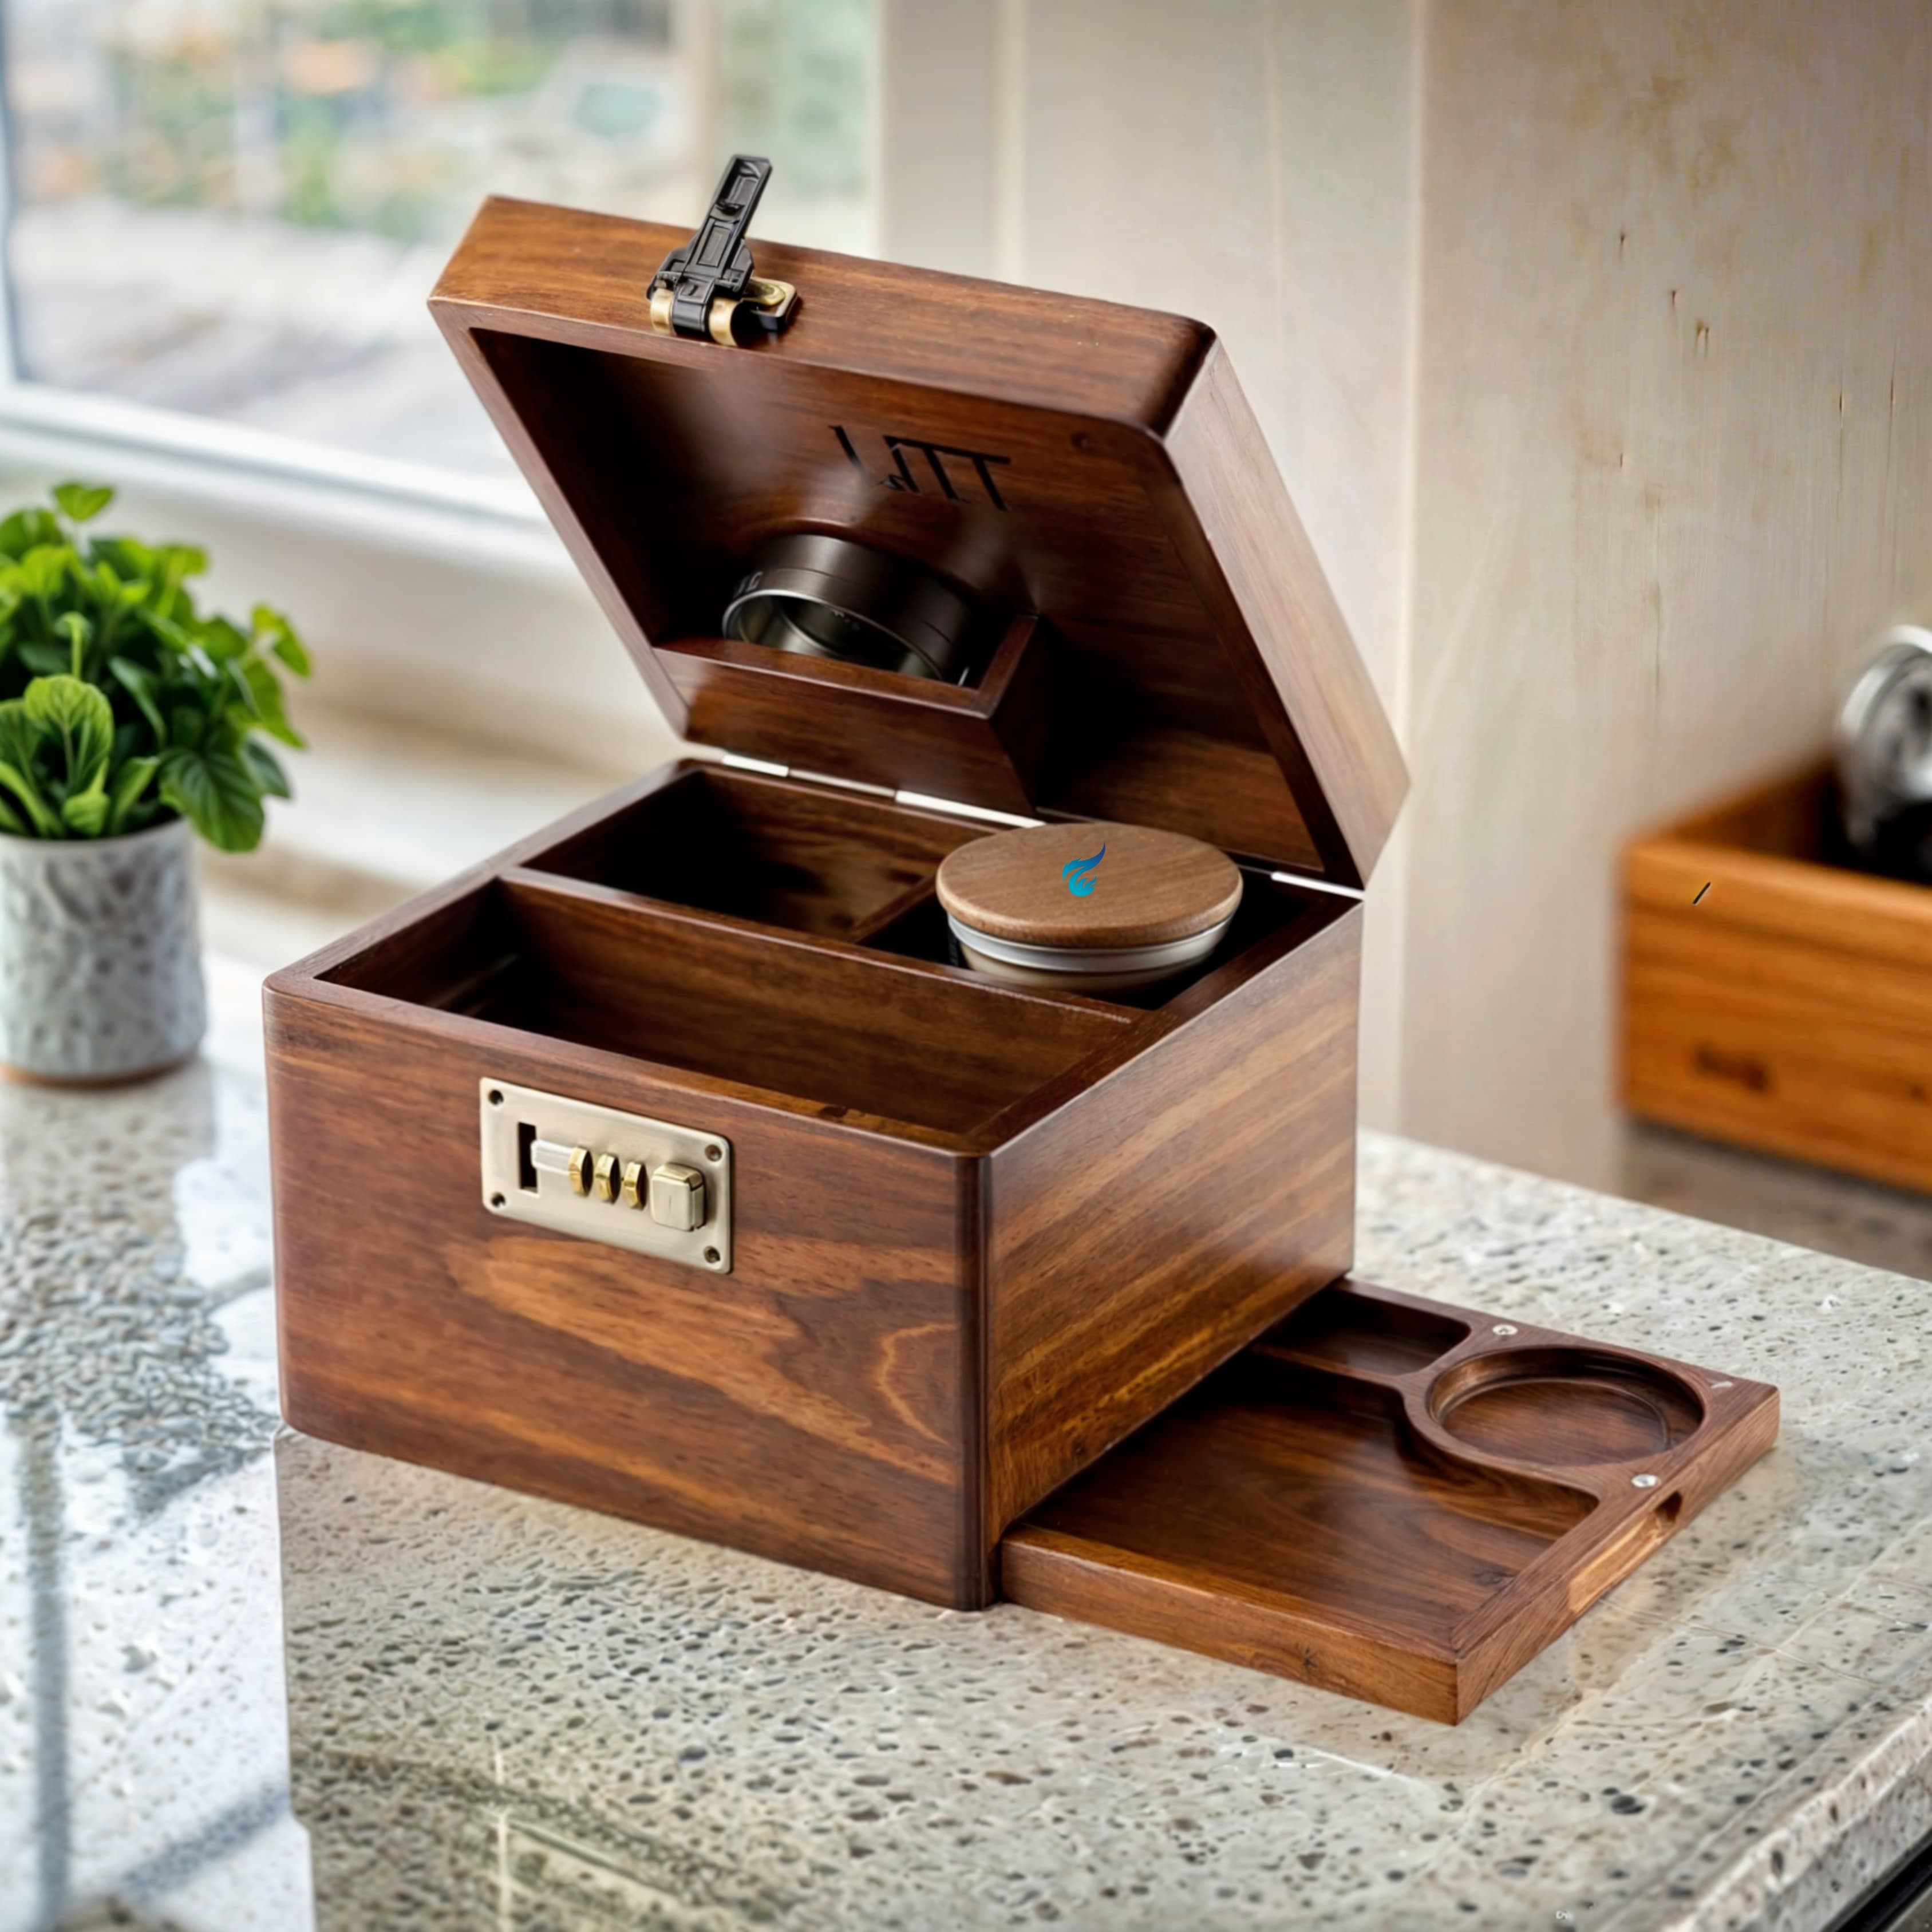 LITT - Stash Box Set with Glass Jar, Hidden Tray, and Storage Box (Brown)